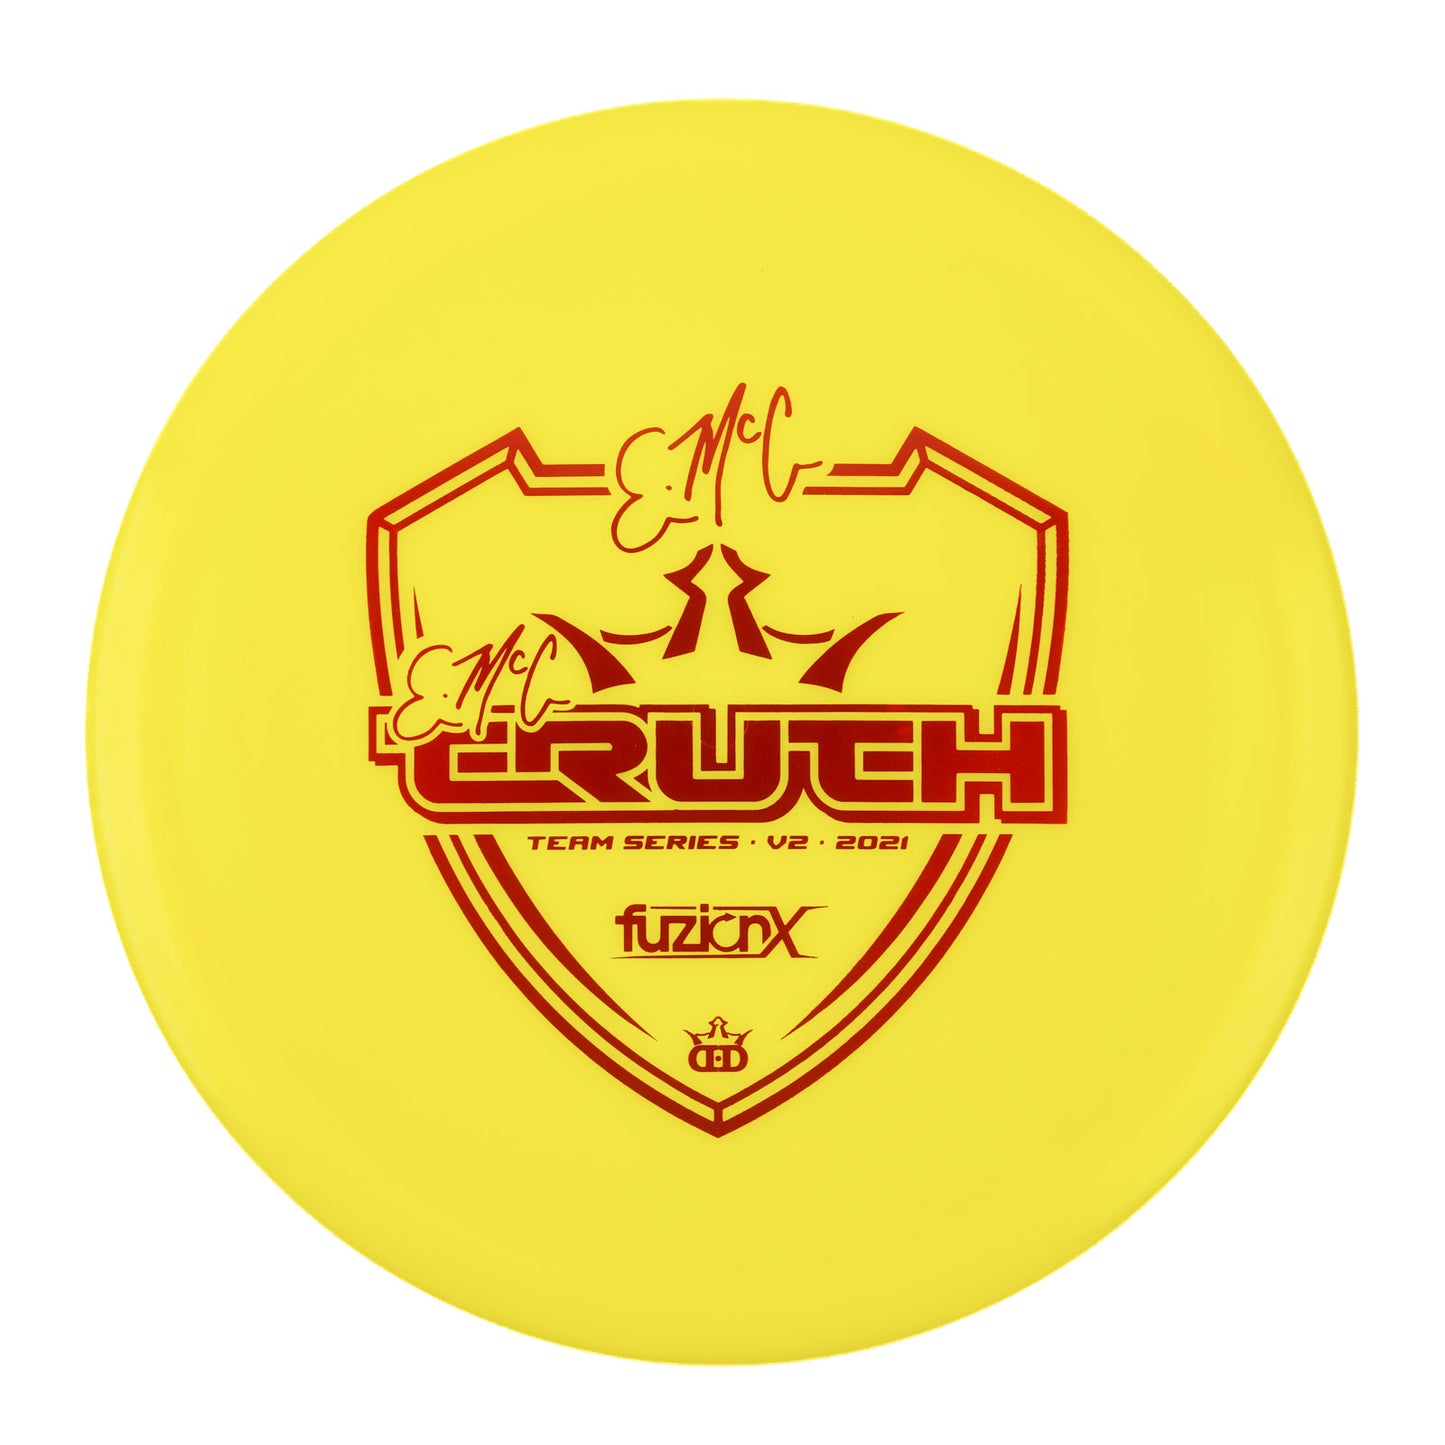 Dynamic Discs EMAC Truth - Eric McCabe 2021 Team Series V2 Fuzion-X 177g | Style 0001